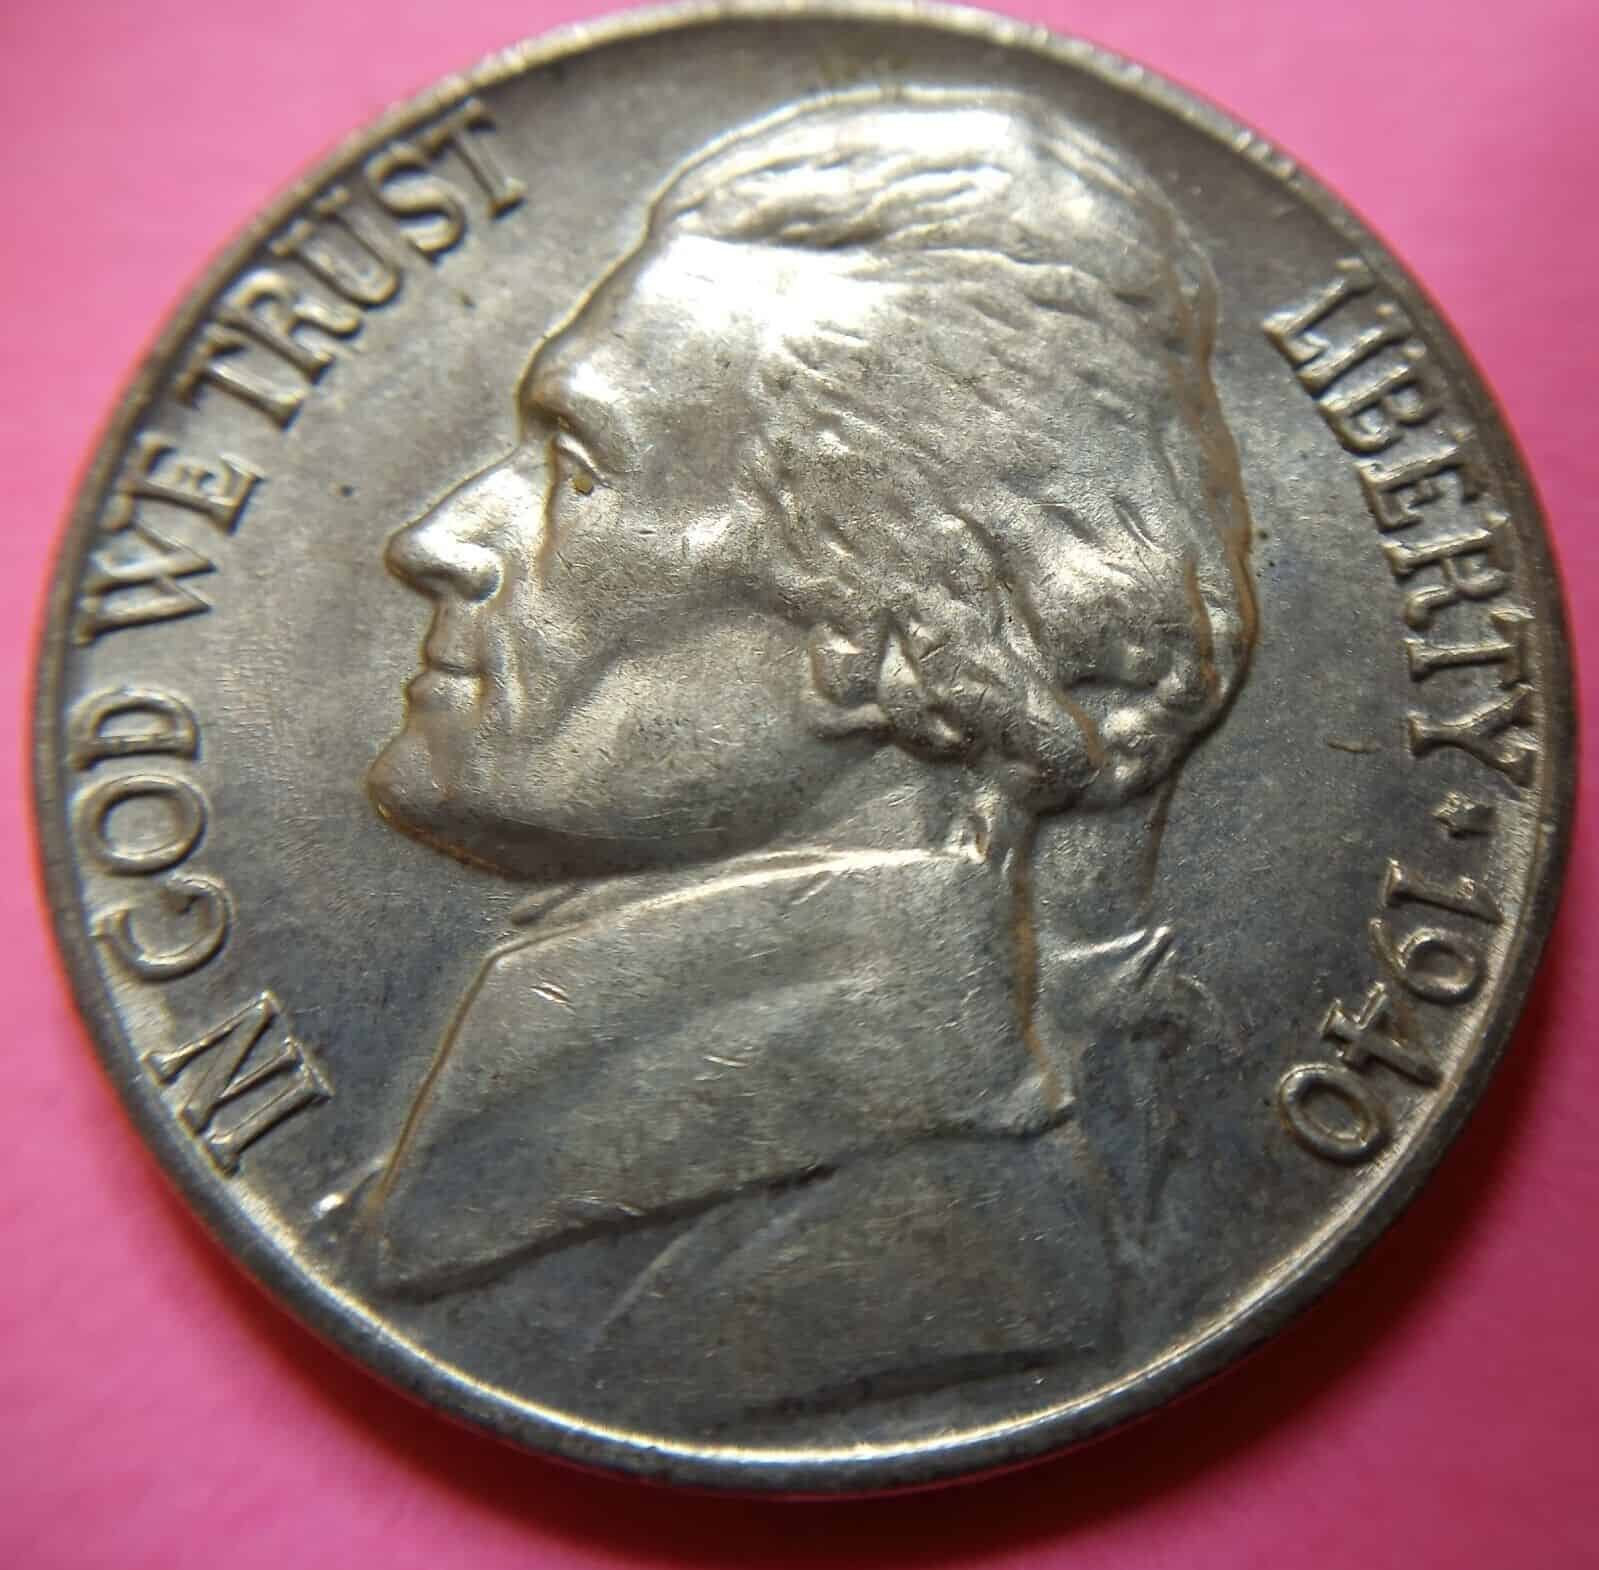 1940 Nickel Doubled Die Error